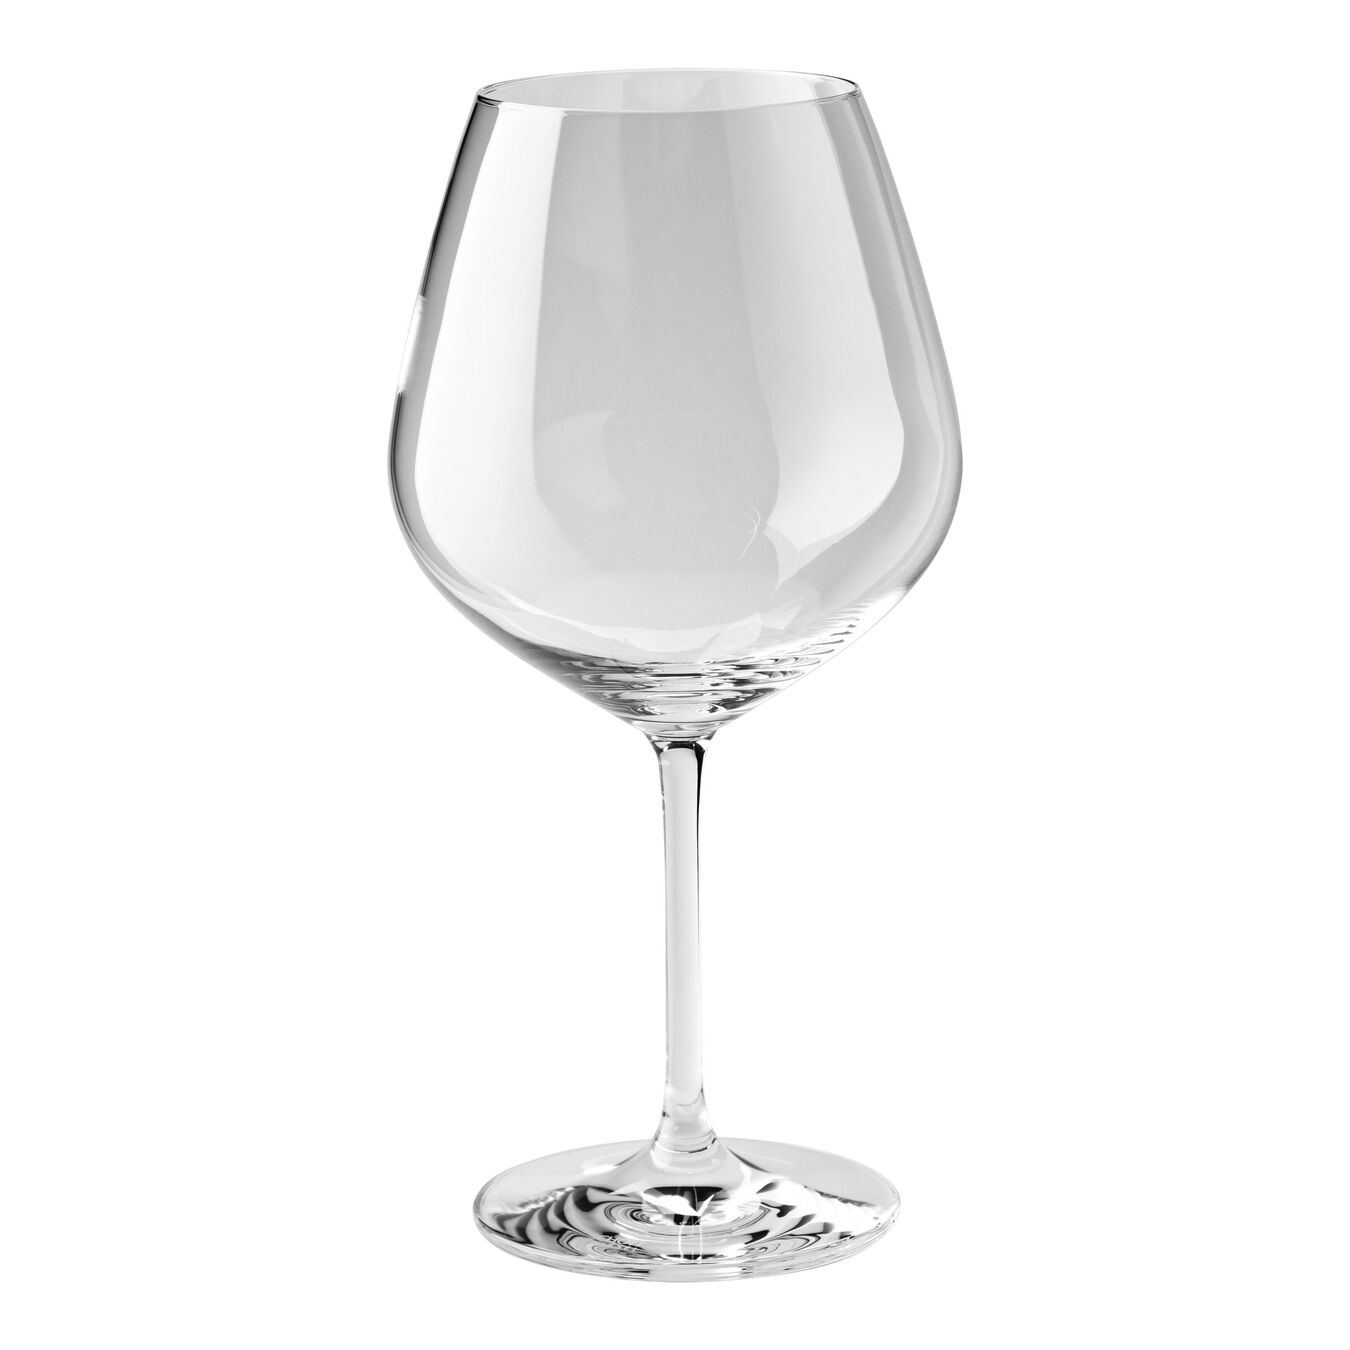 Rotweinglas 725 ml,,large 1